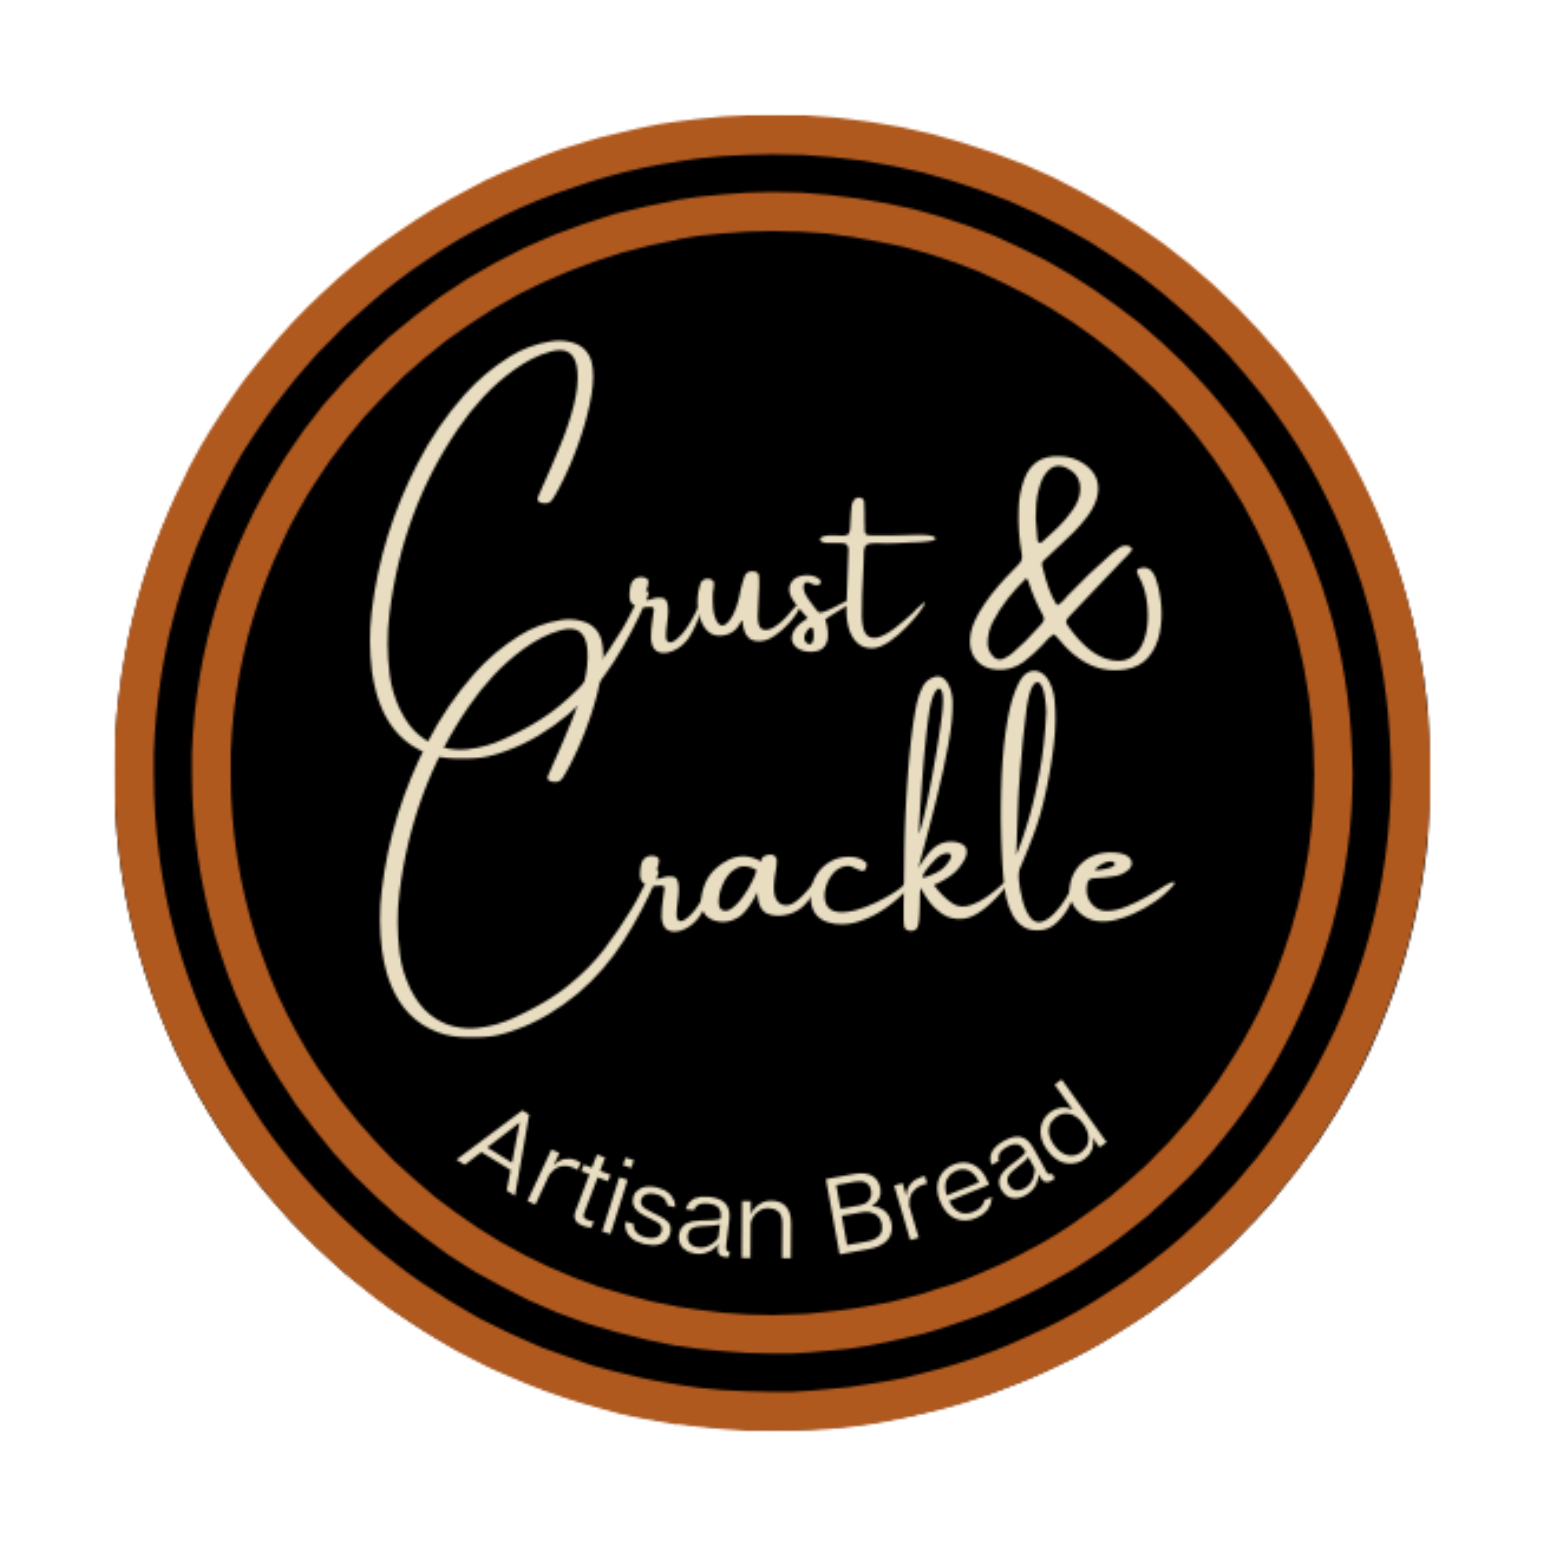 Crust & Crackle Artisan Bread